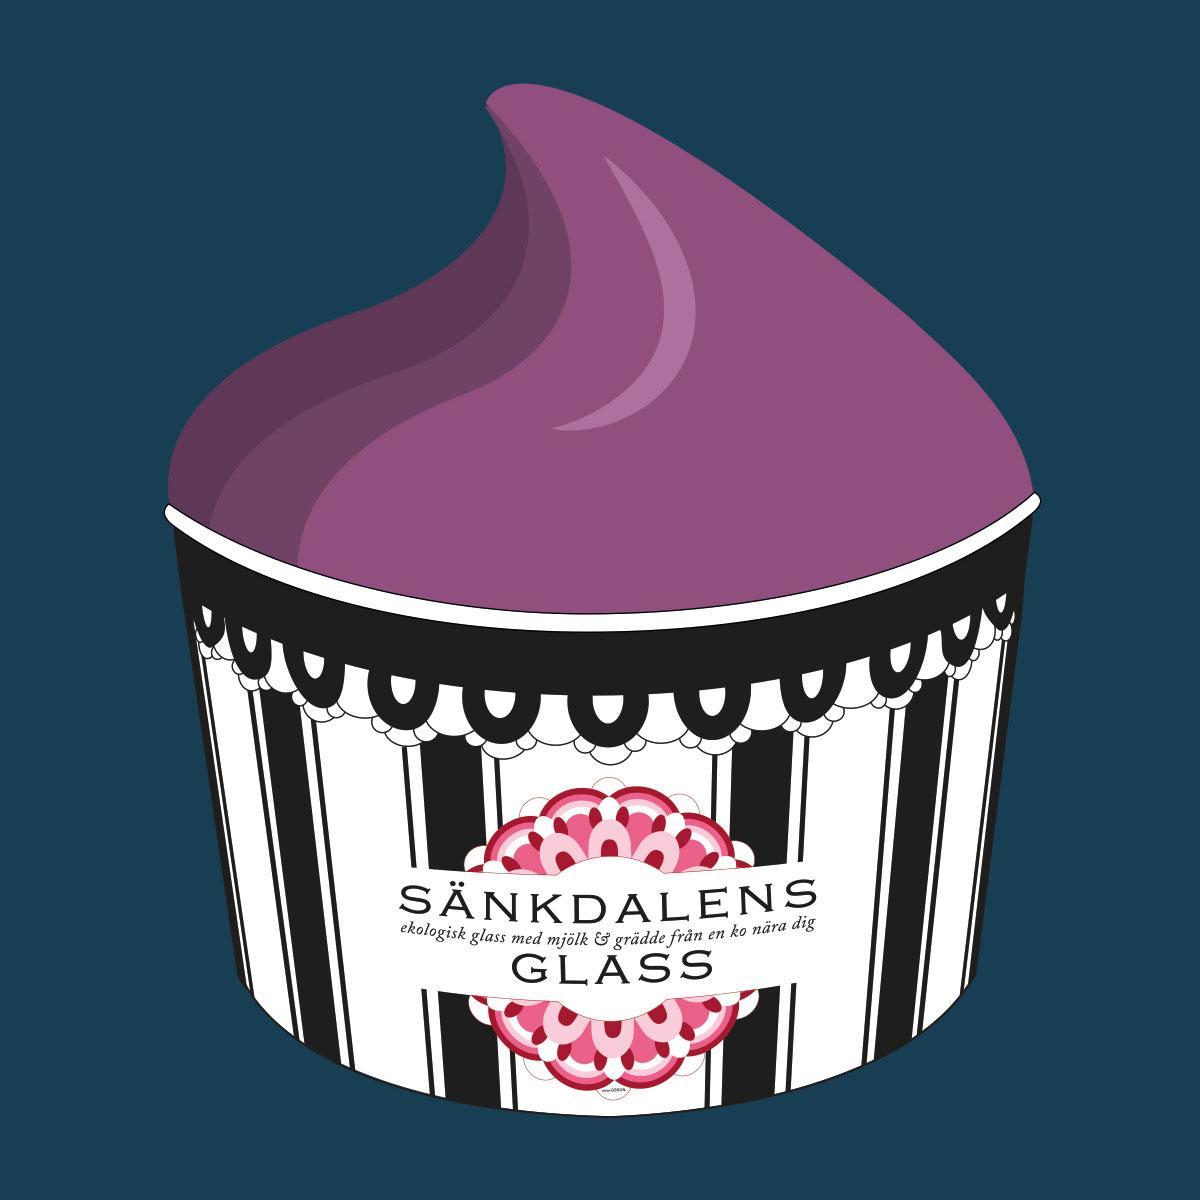 Blueberry ice cream Sänkdalens glass